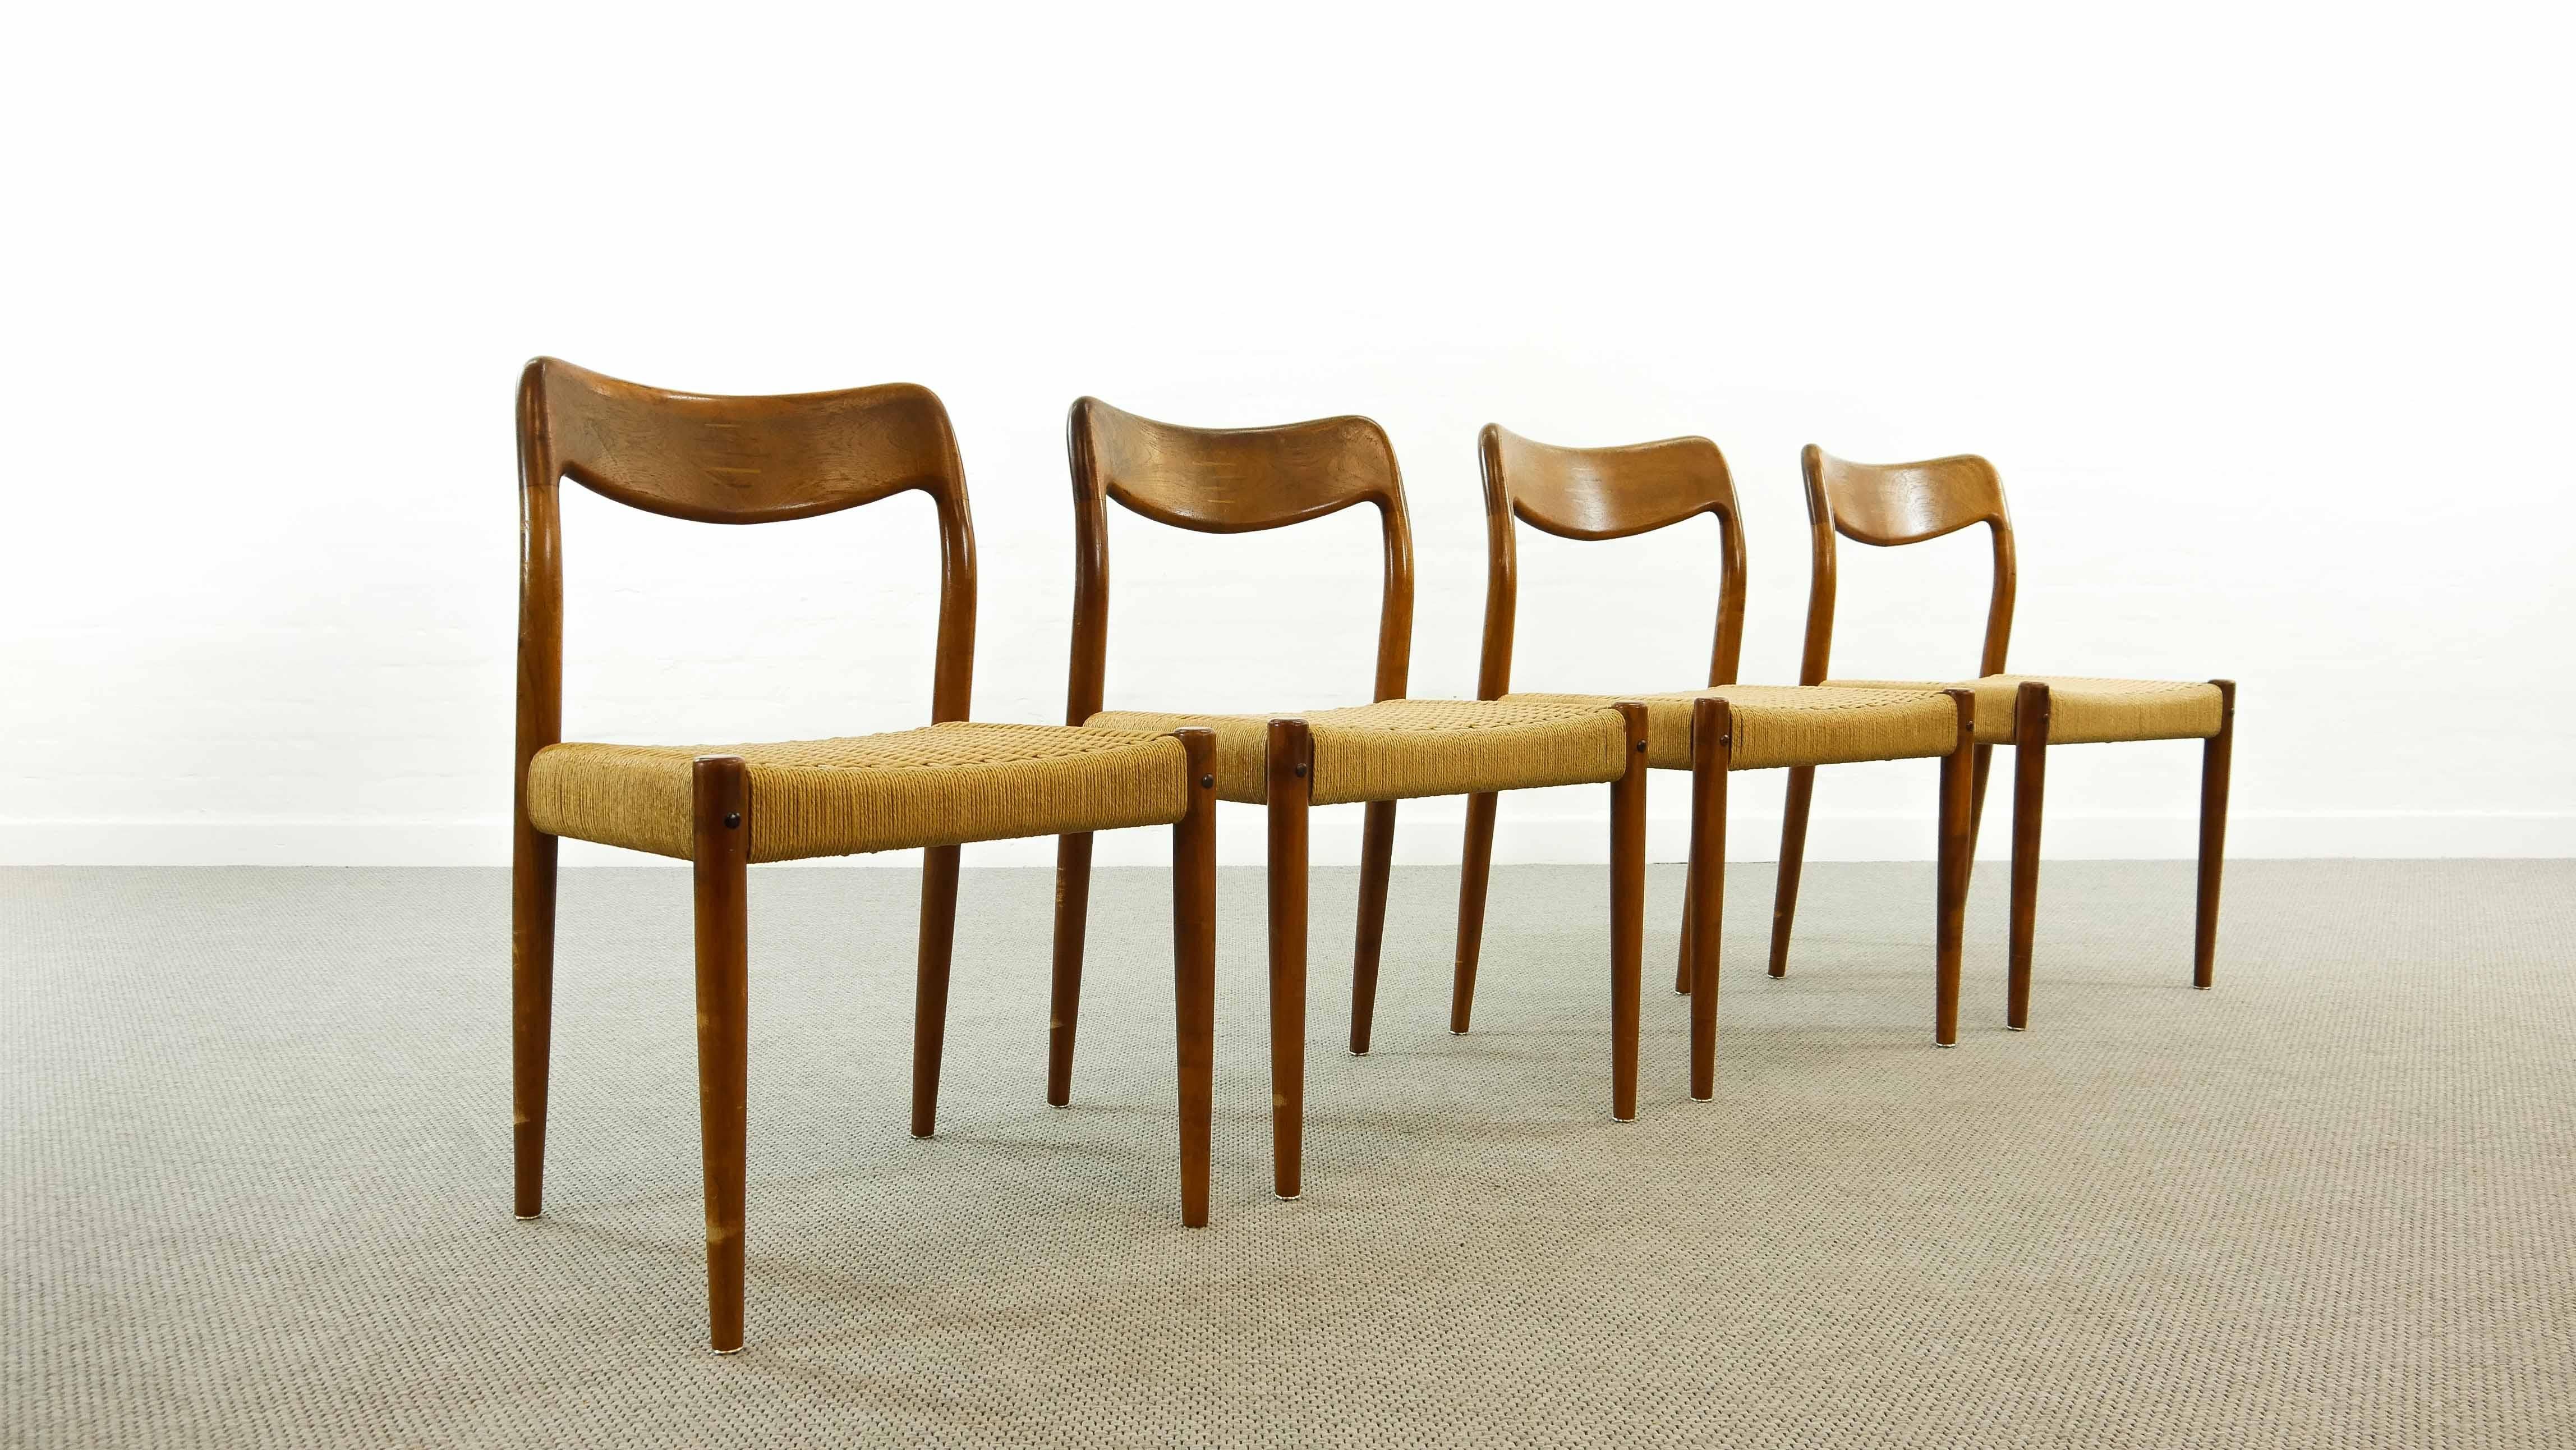 Scandinavian Modern Set of 4 Teak Chairs with Papercord Seat by Johannes Andersen for Uldum, Denmark